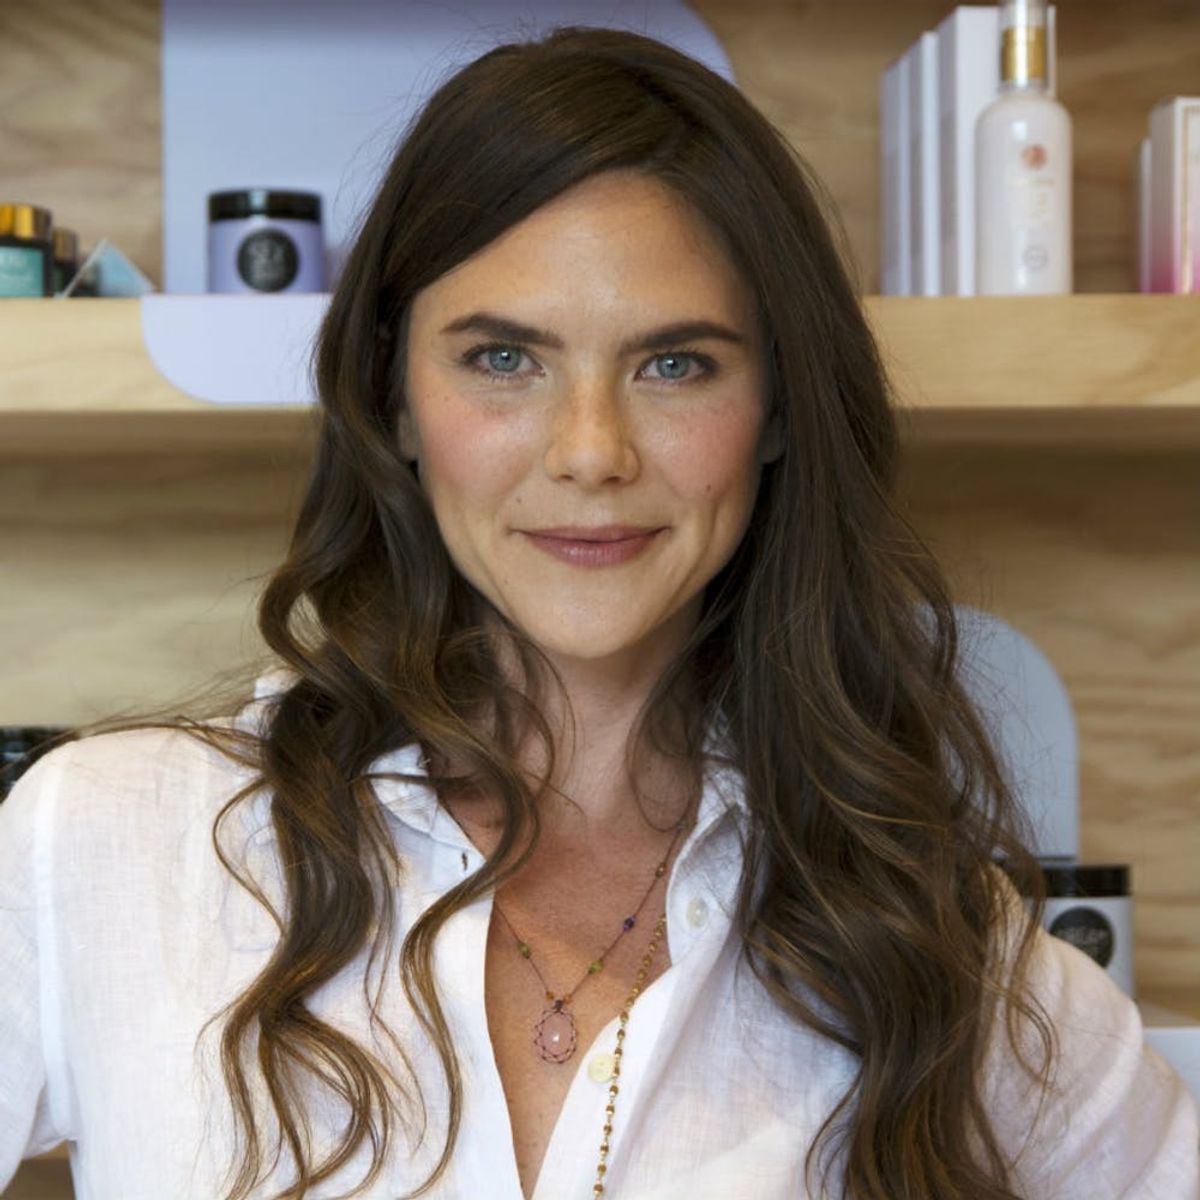 Moon Juice Founder Amanda Chantal Bacon Shares 8 Ways to Get That Healthy Glow